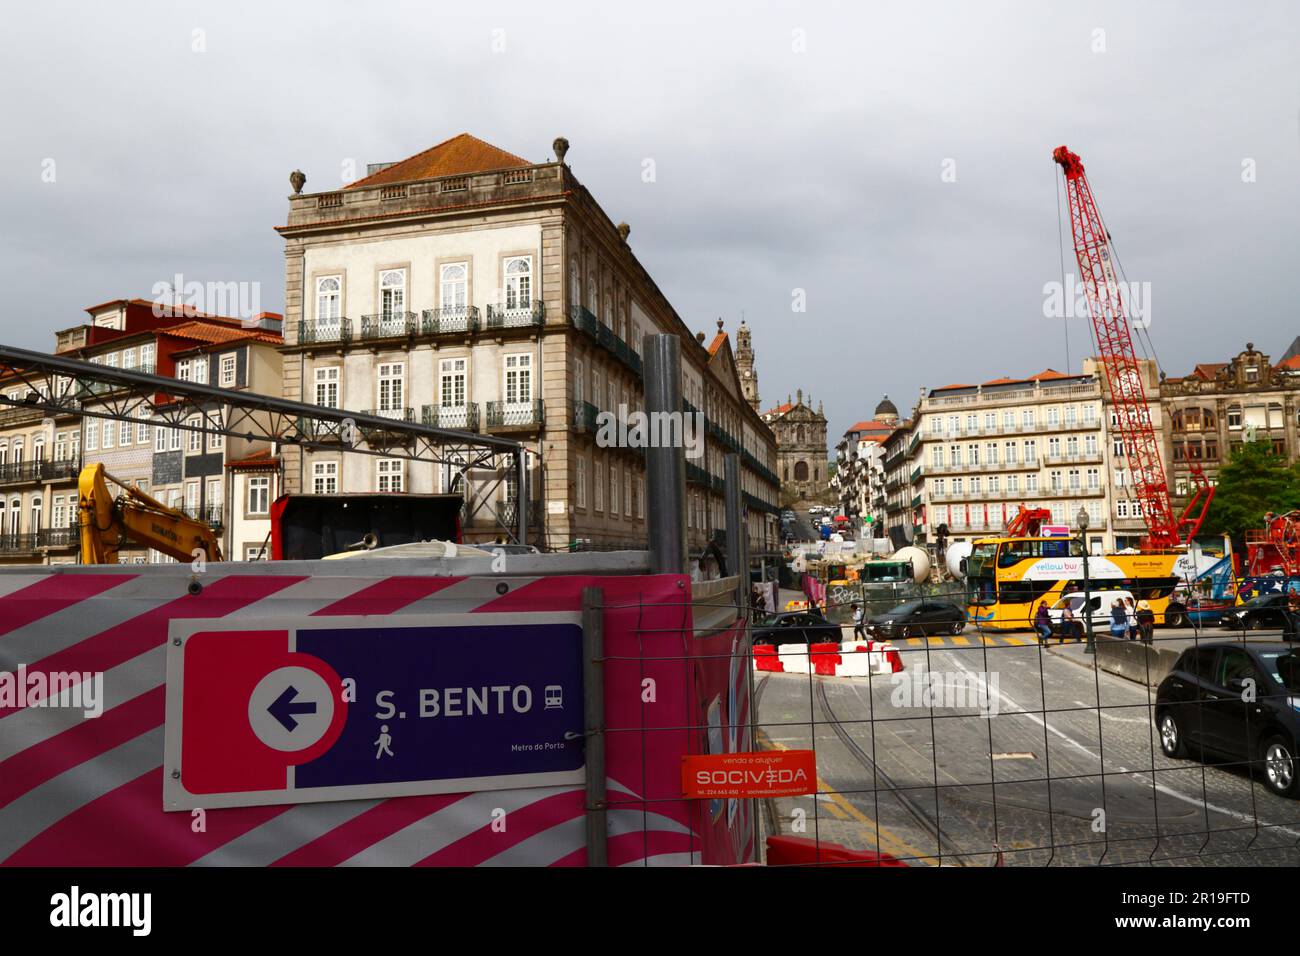 Construction site for new Pink Line Metro project on Praça da Liberdade next to Sao Bento train station, Porto / Oporto, Portugal Stock Photo